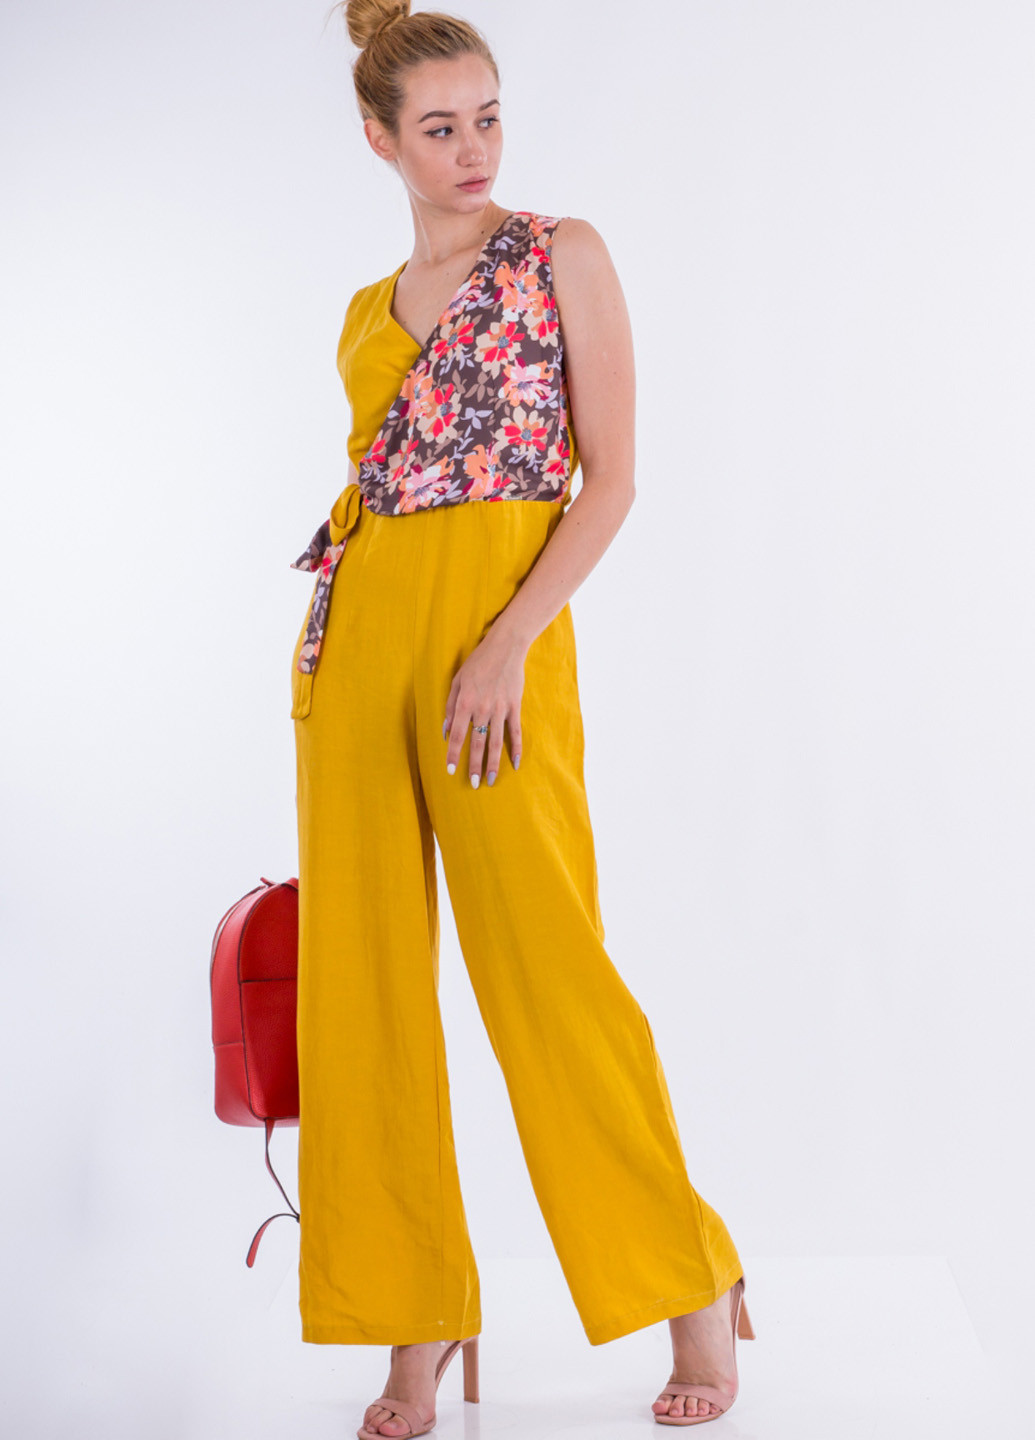 Комбинезон Sarah Chole комбинезон-брюки цветочный жёлтый кэжуал лен, полиэстер